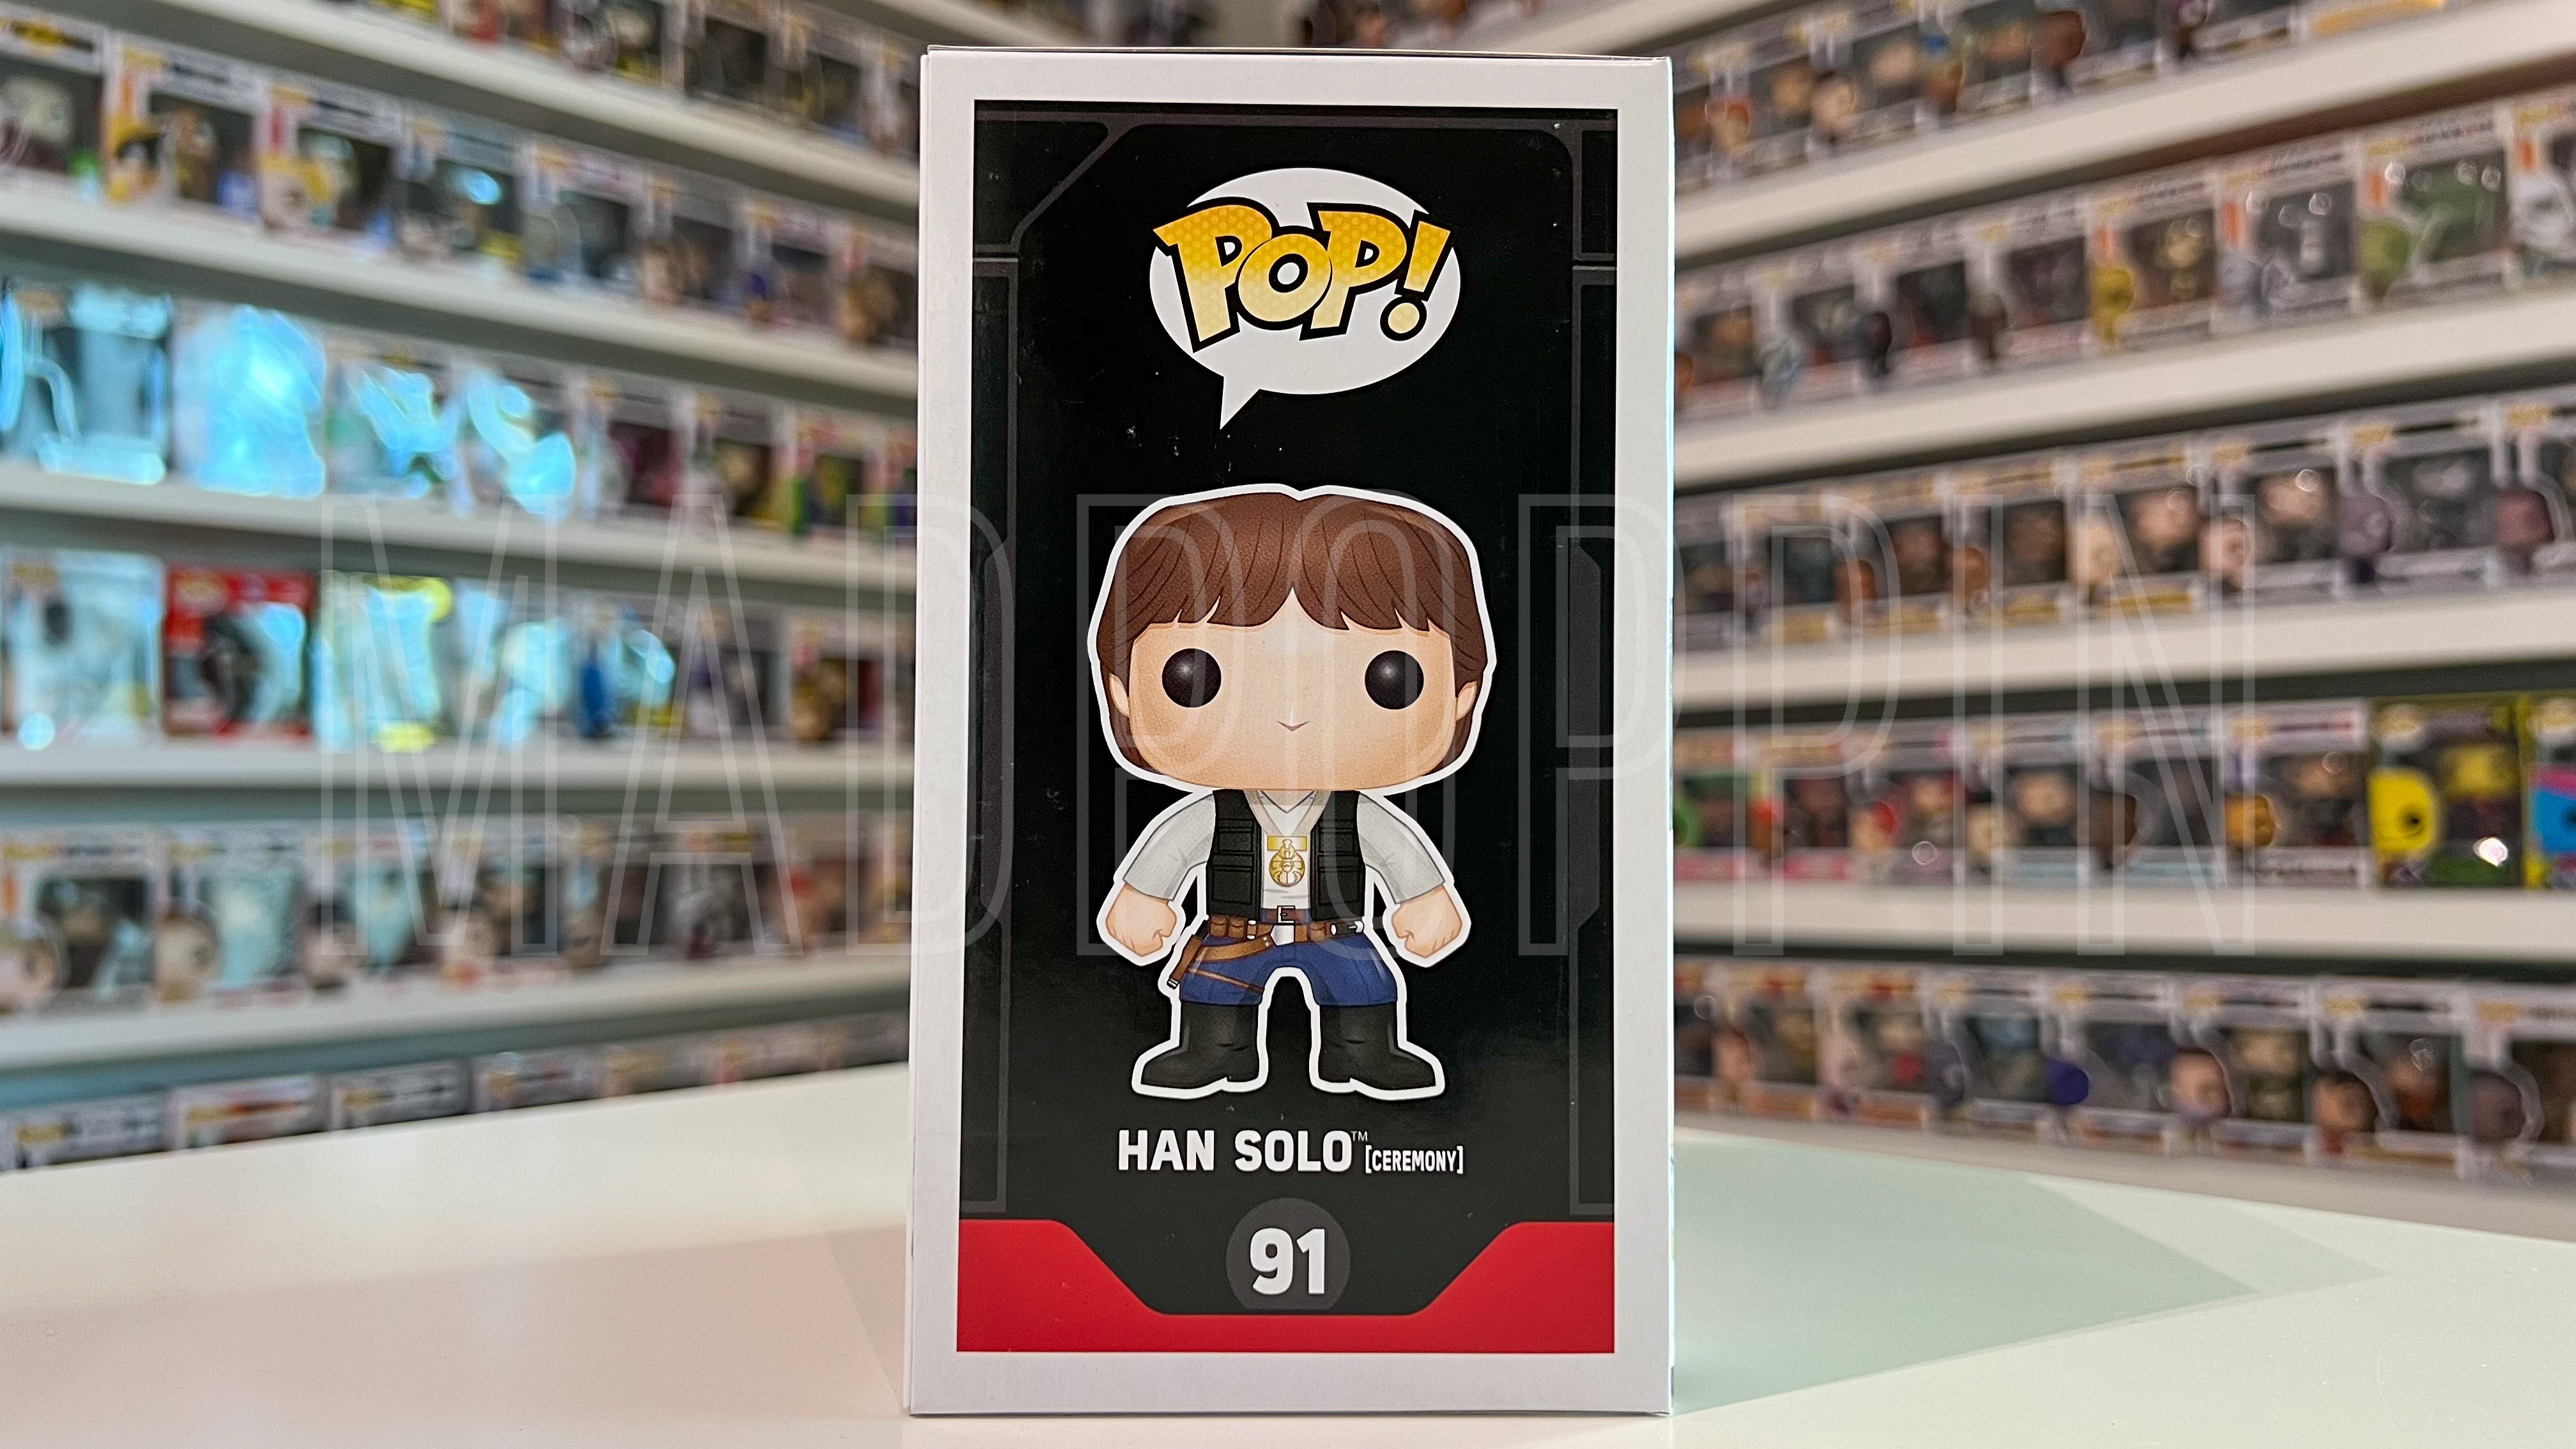 POP! Star Wars: Star Wars - Han Solo (Ceremony)